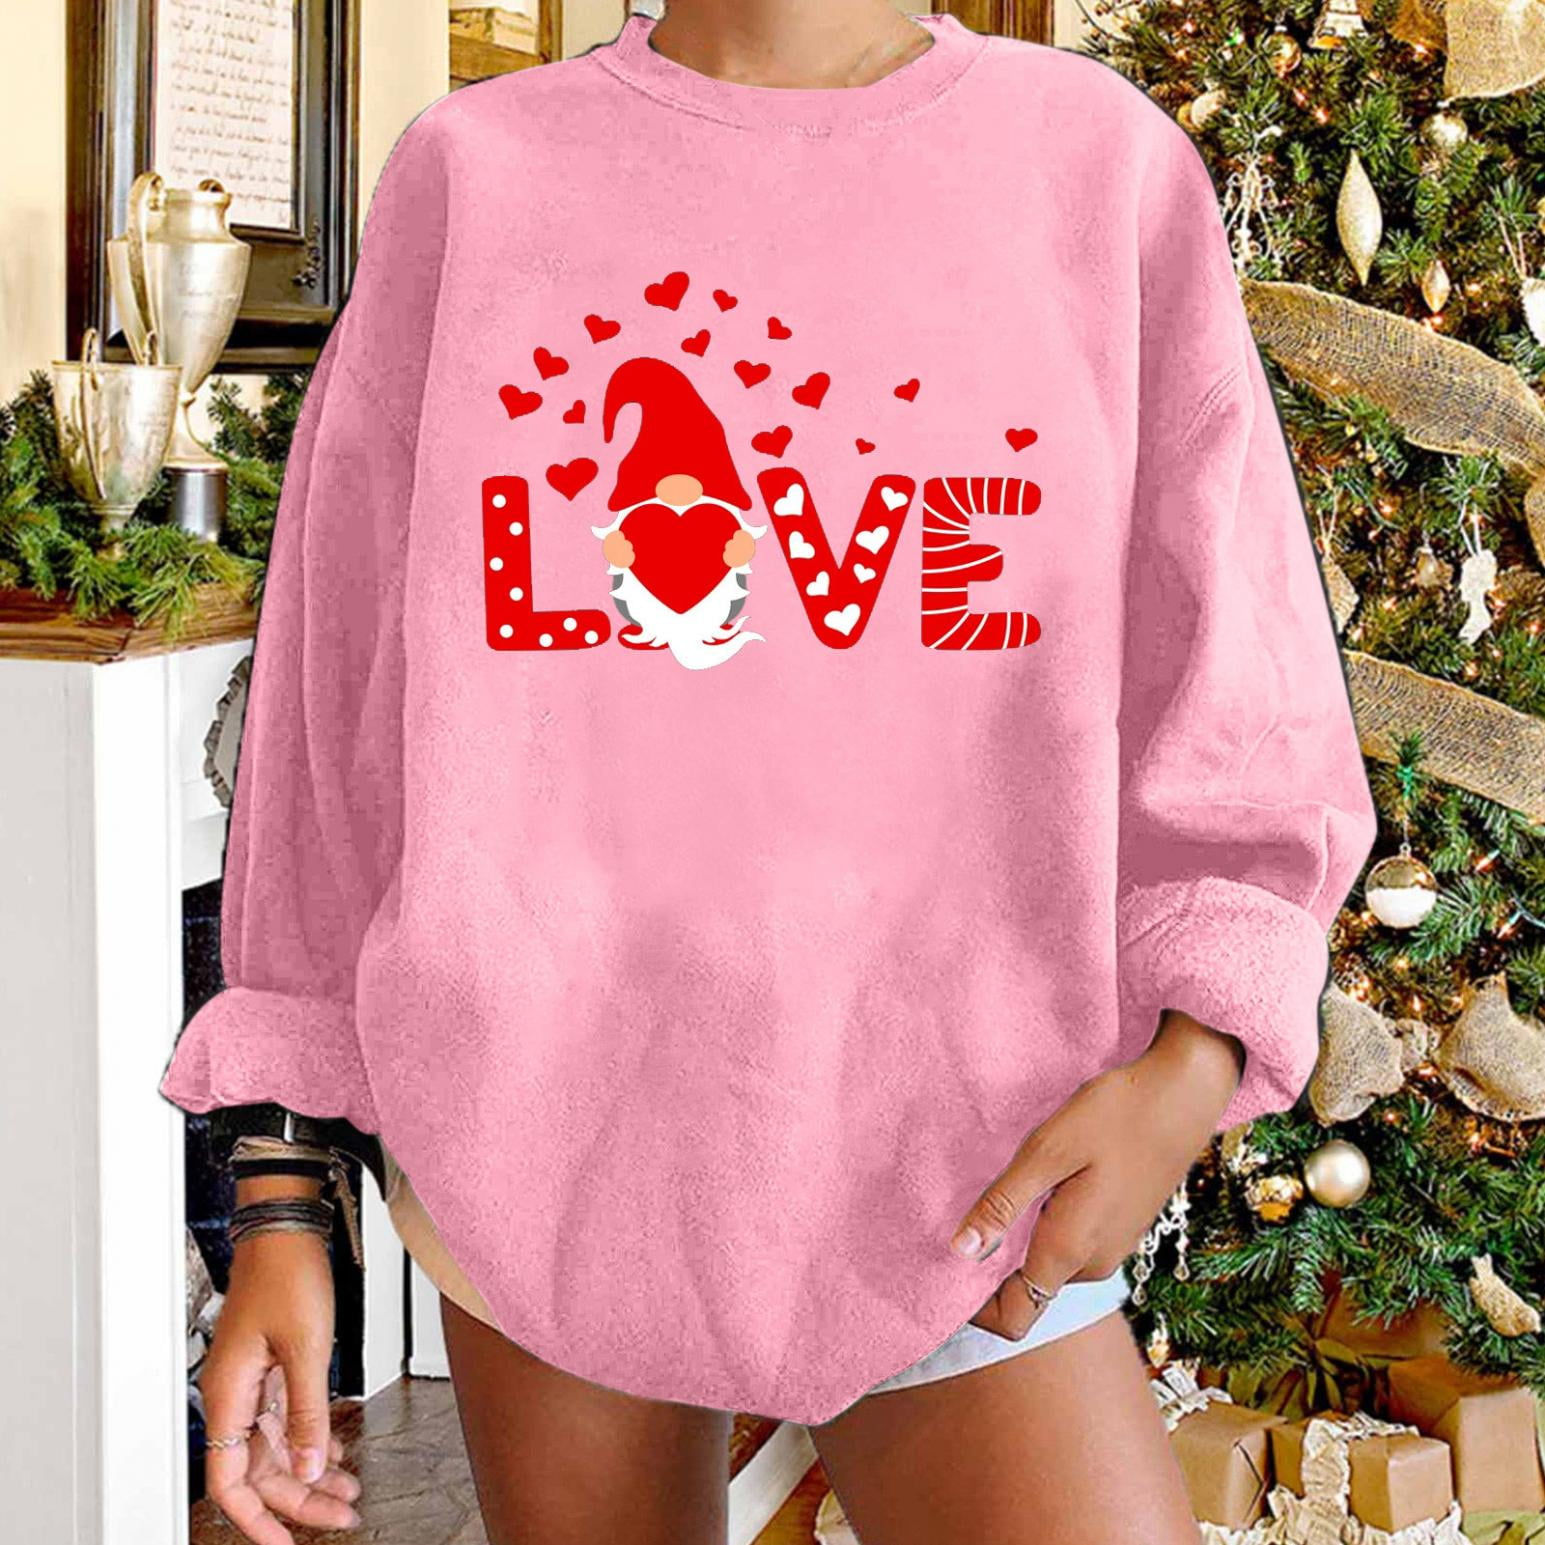 Wirziis Sweatshirt for Women Summer Casual Loose Fit Long Sleeve Crewneck Tunic Tops Trendy Heart Print Comfy Blouses Tees 